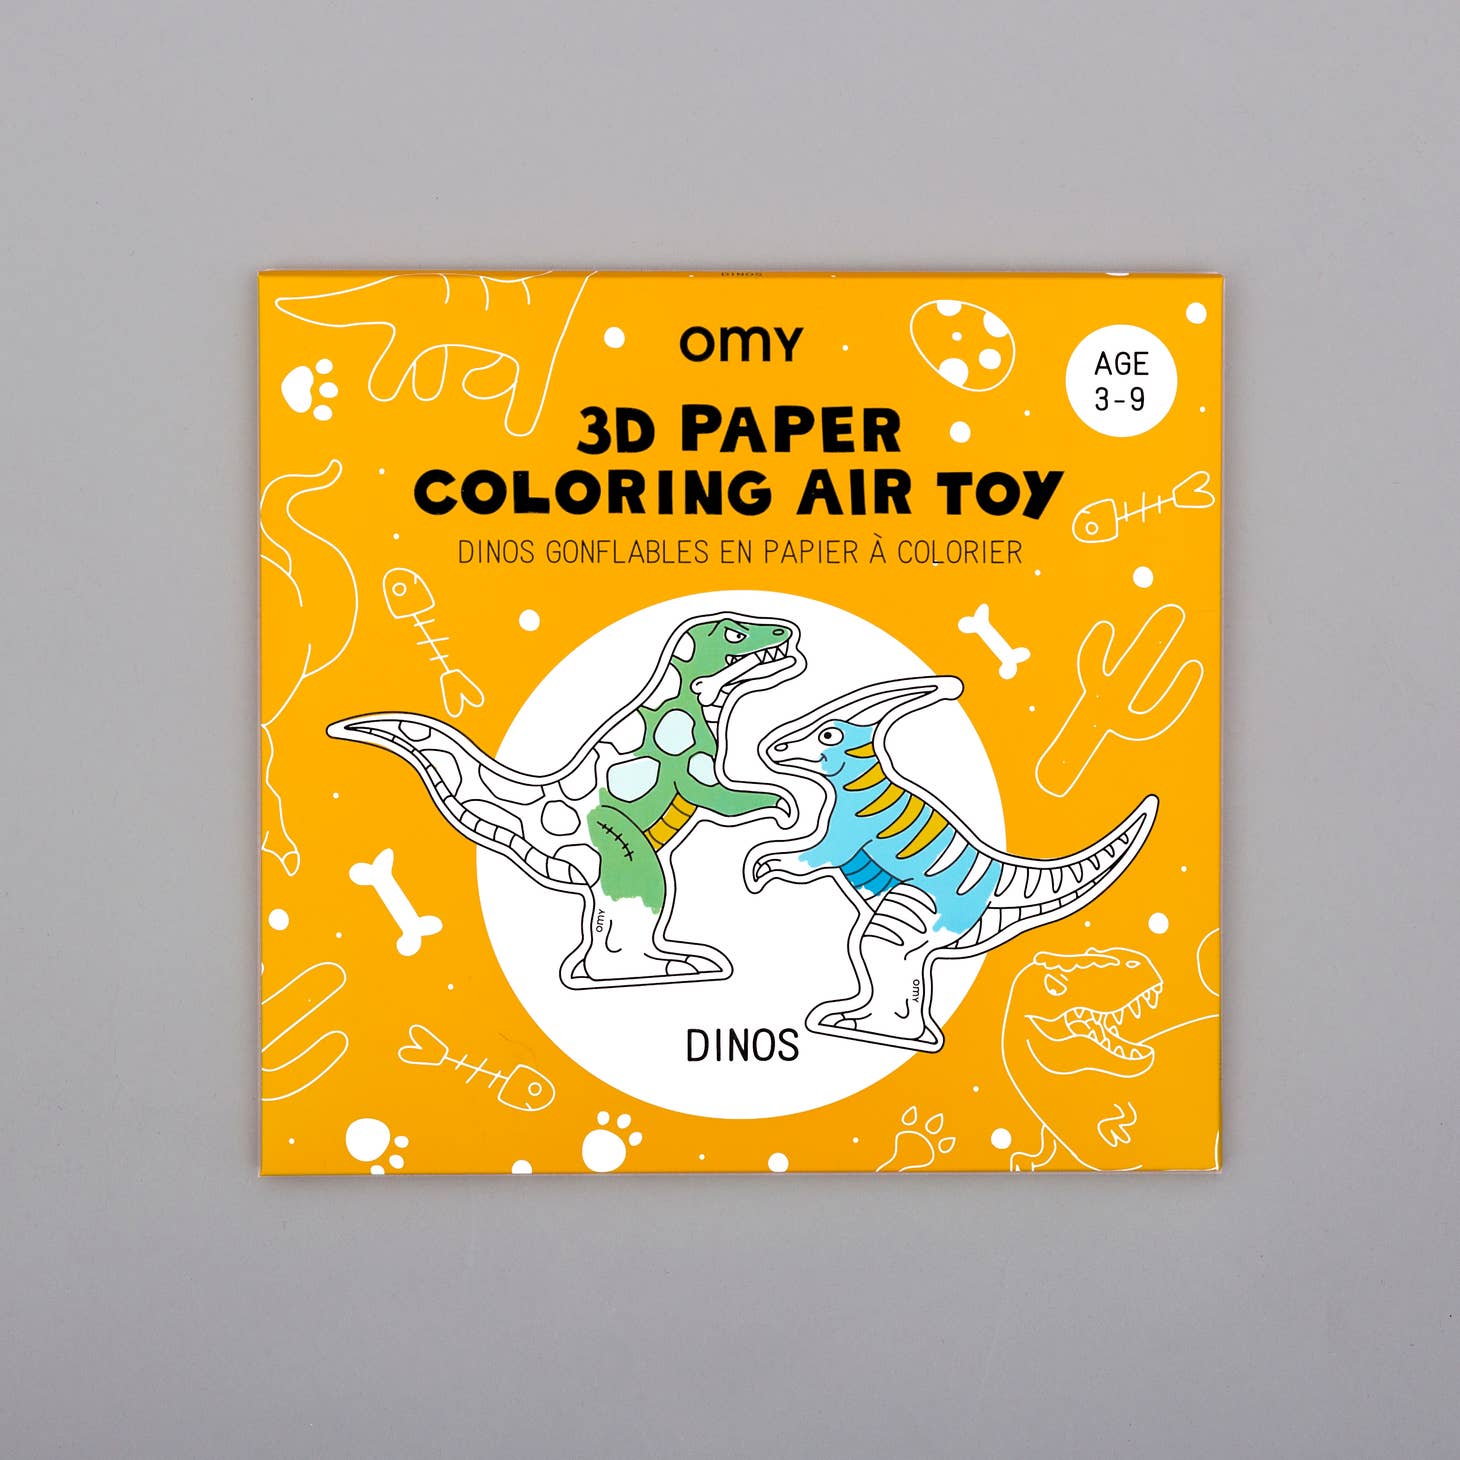 OMY Dinos 3D Air Toy